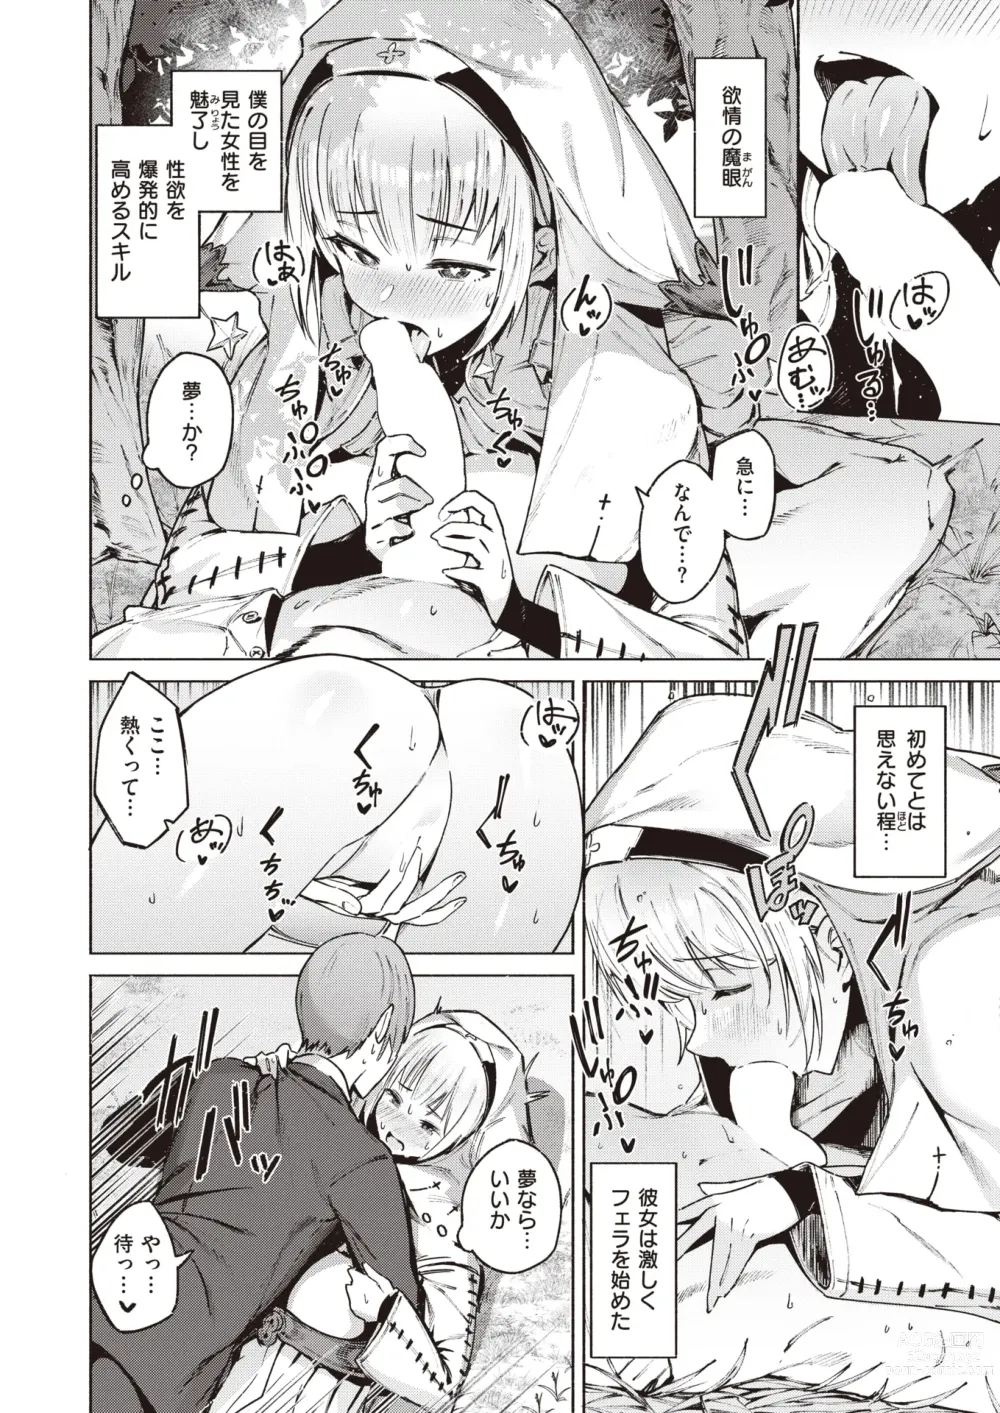 Page 7 of manga Isekai Rakuten Vol. 23